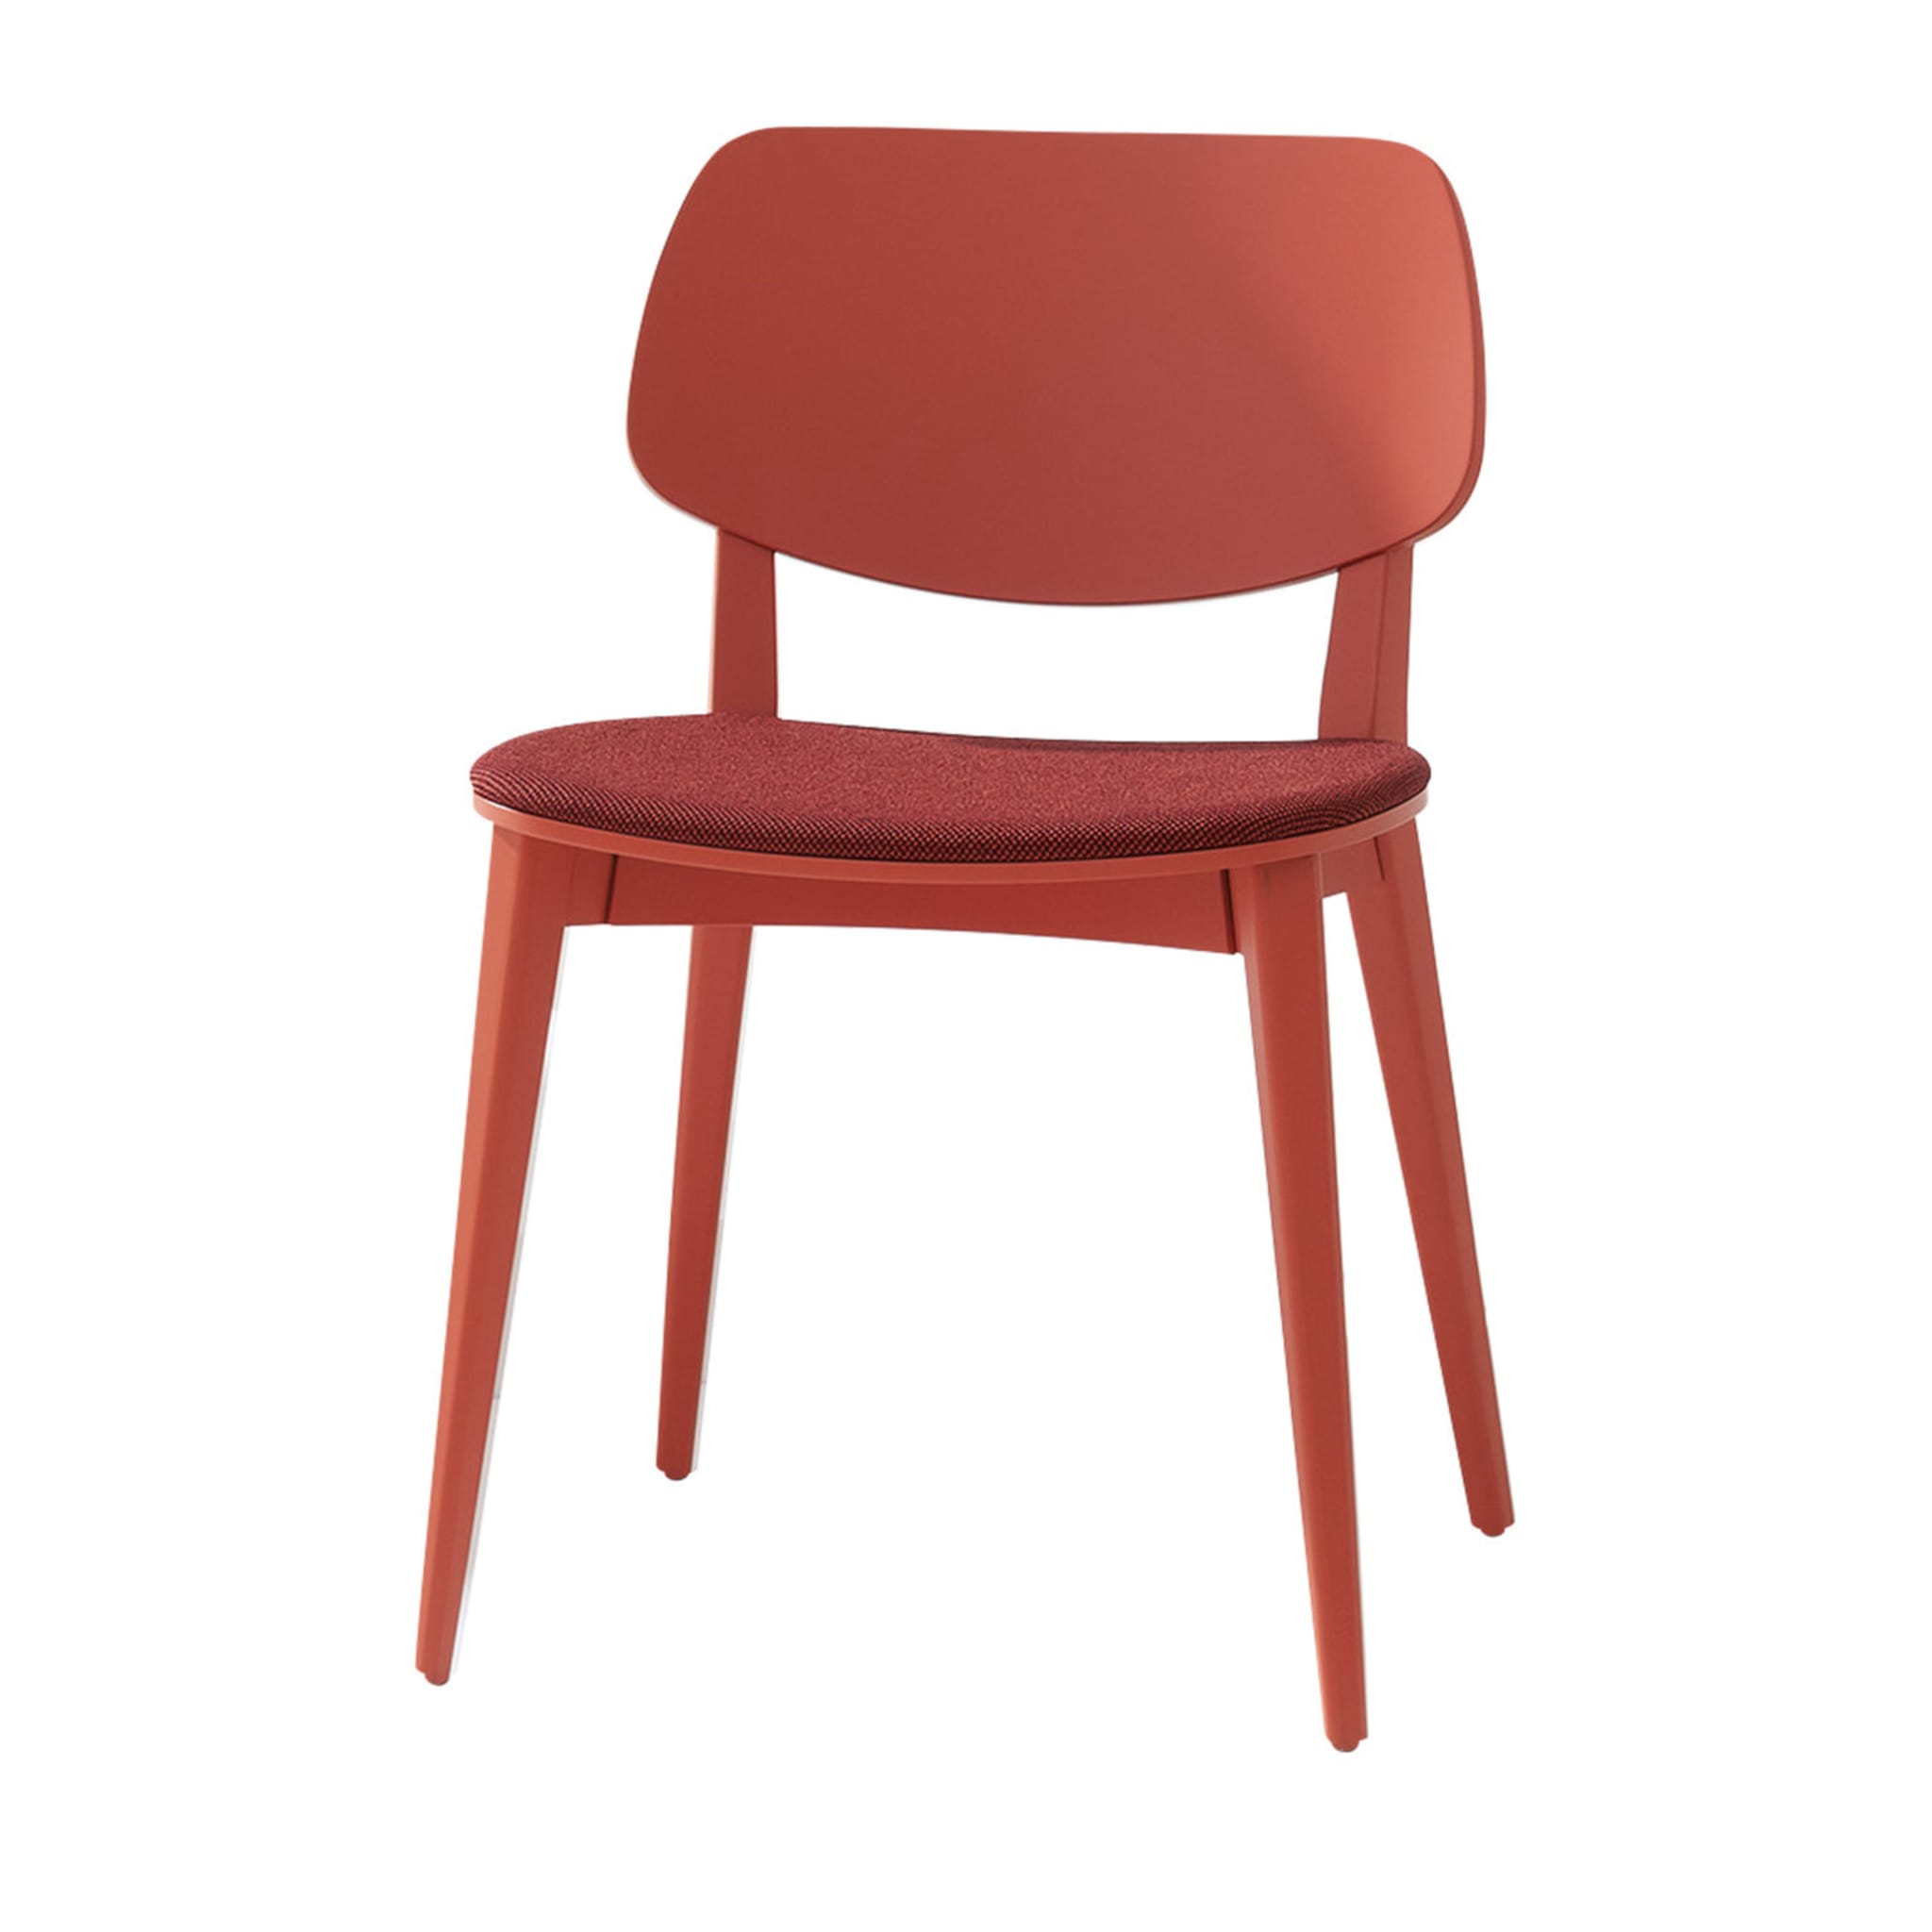 Doll 551 Red Chair by Emilio Nanni - Main view